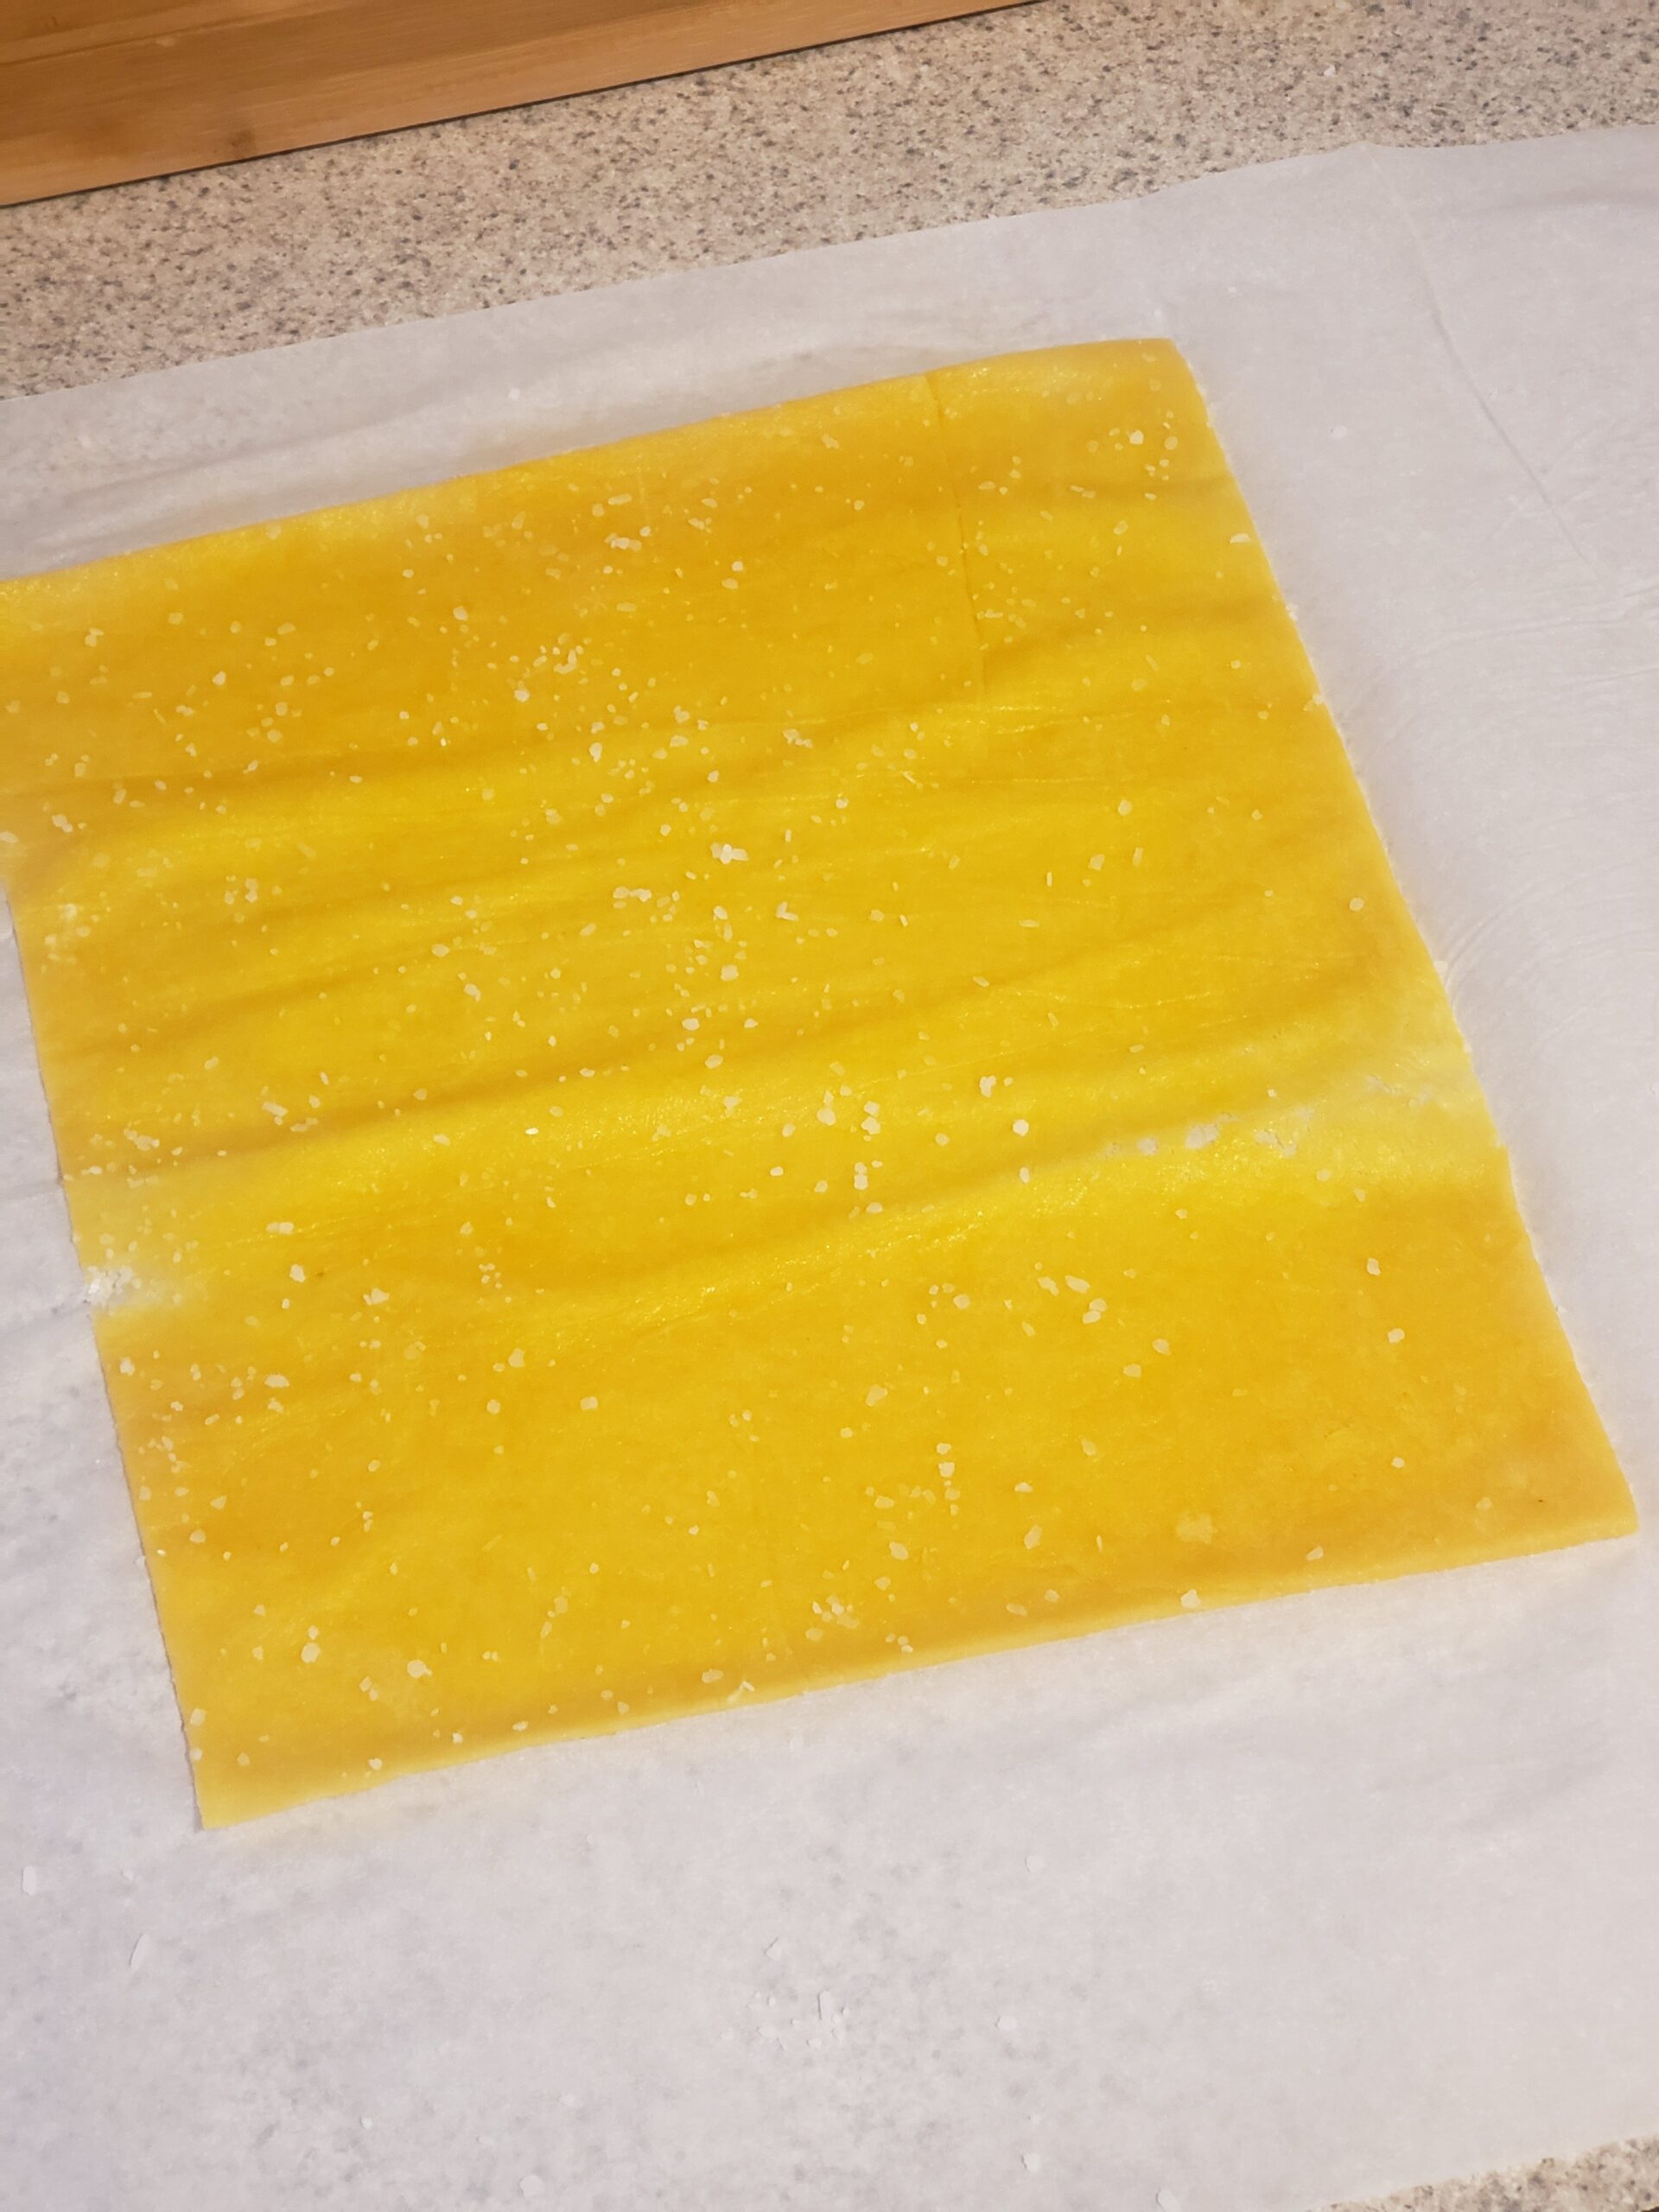 I Made Keto Cheese Its!